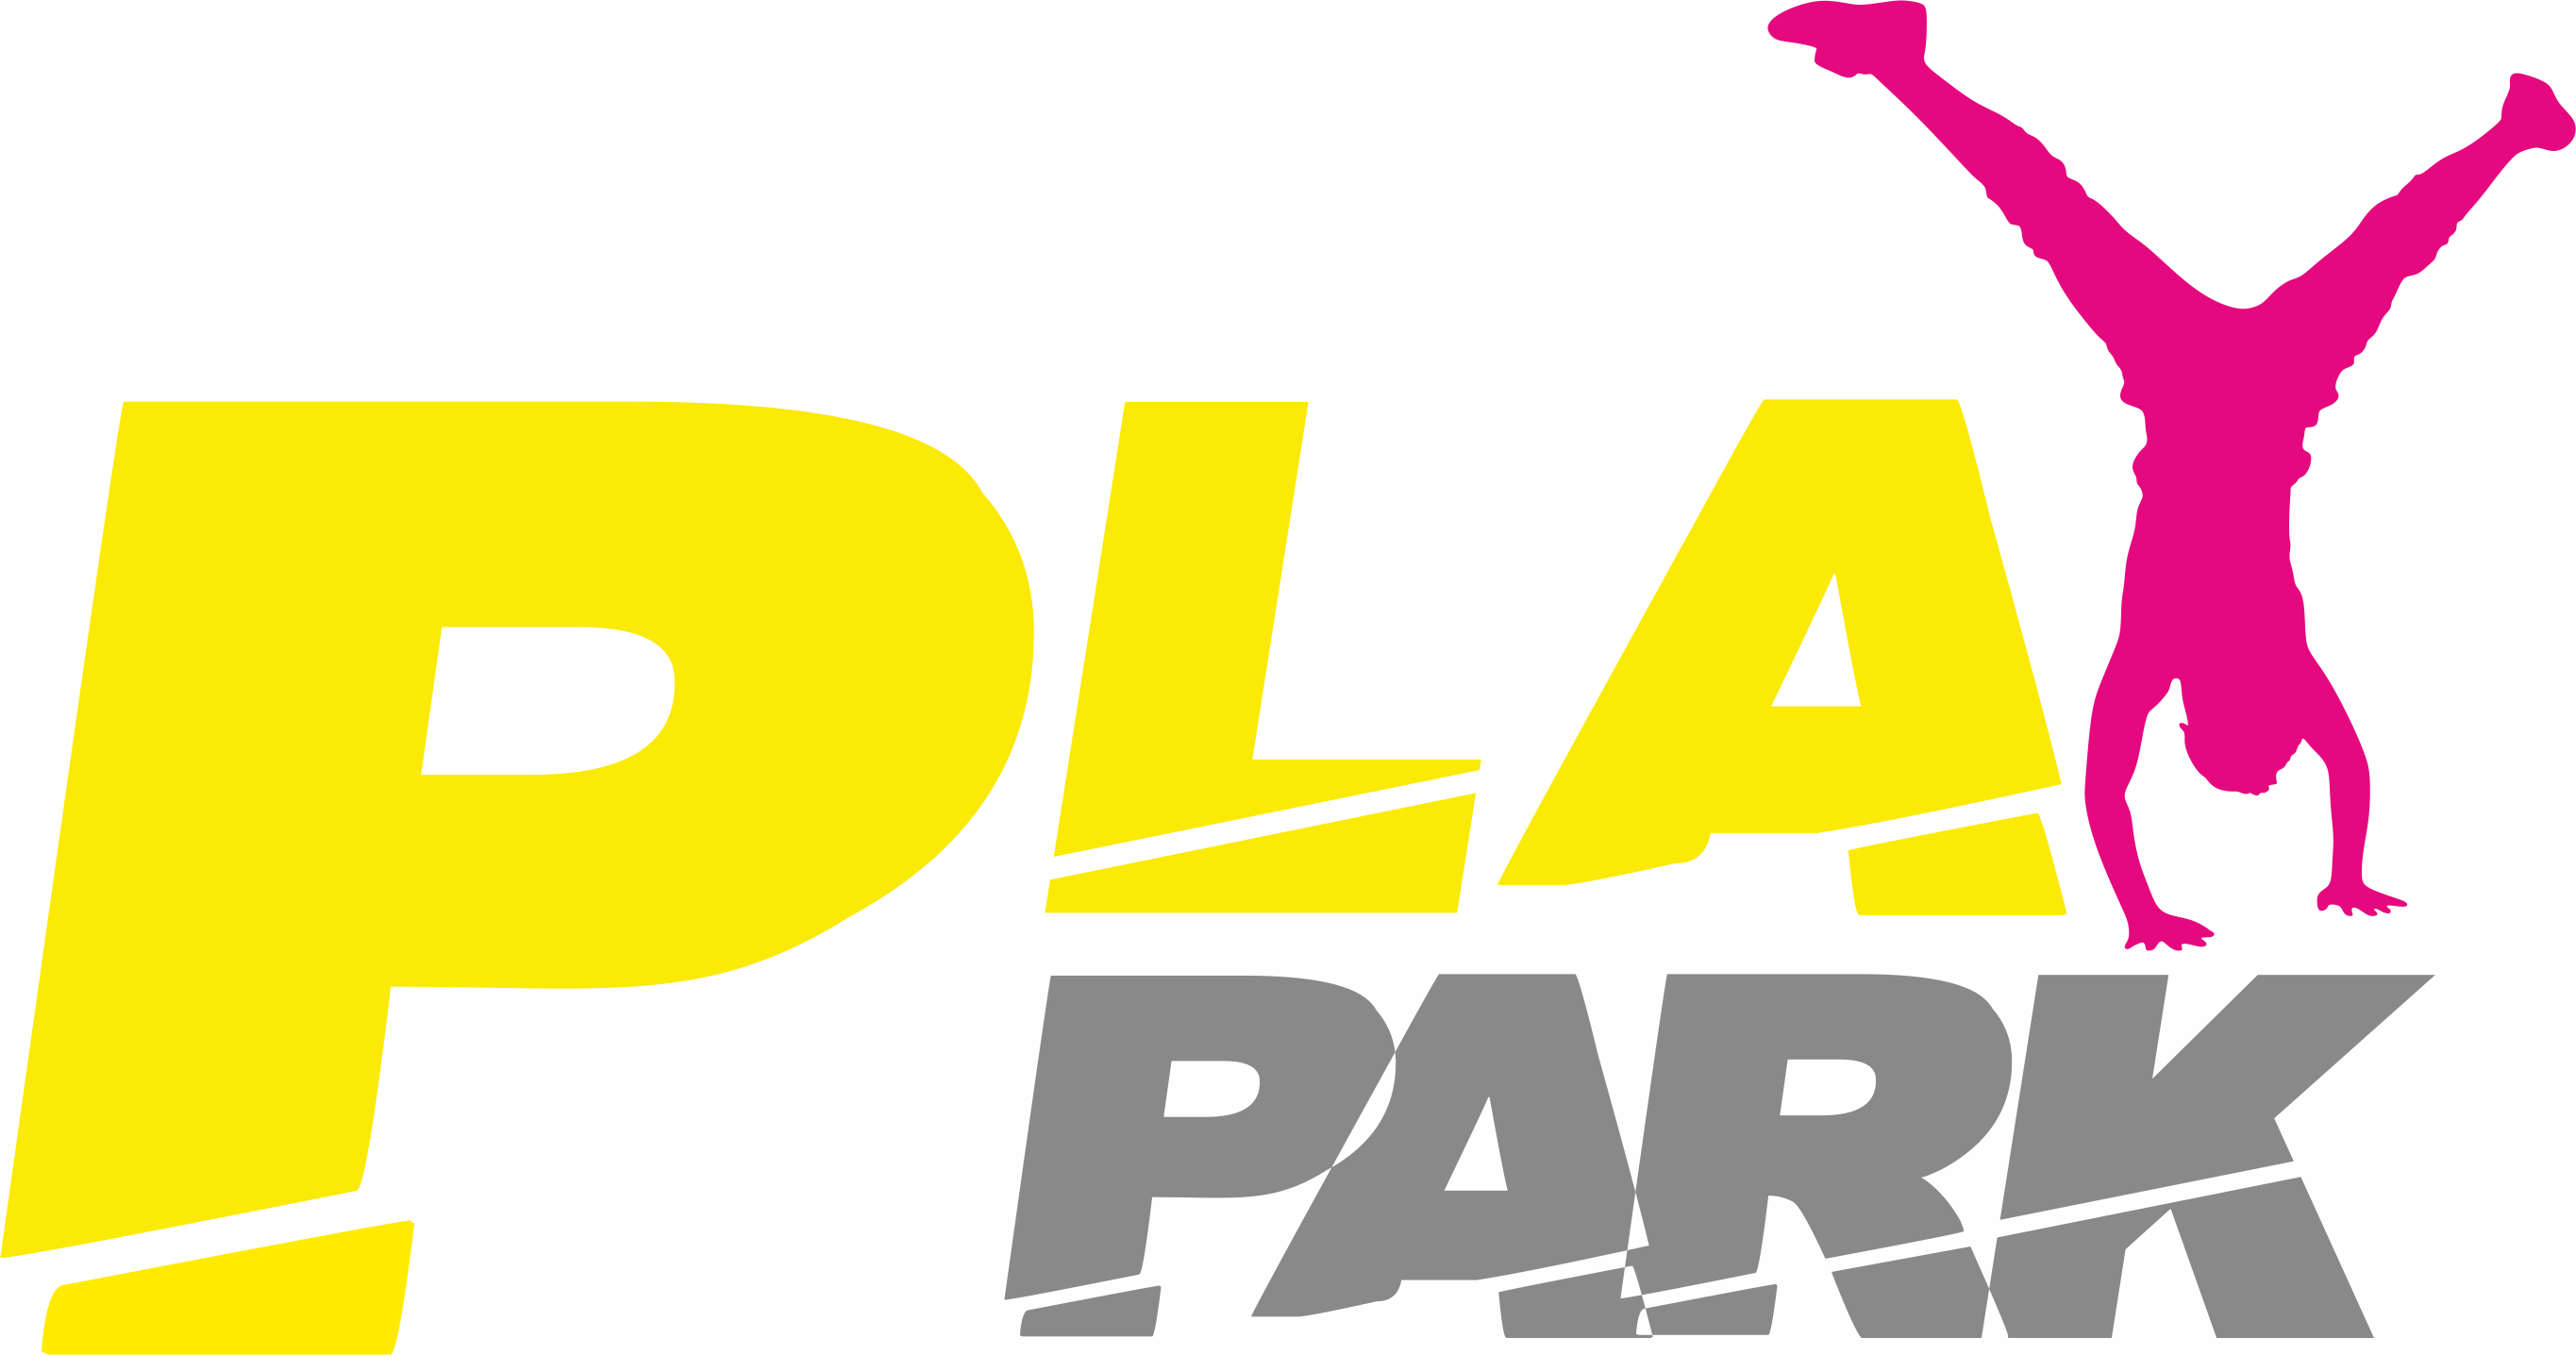 park clipart playpark